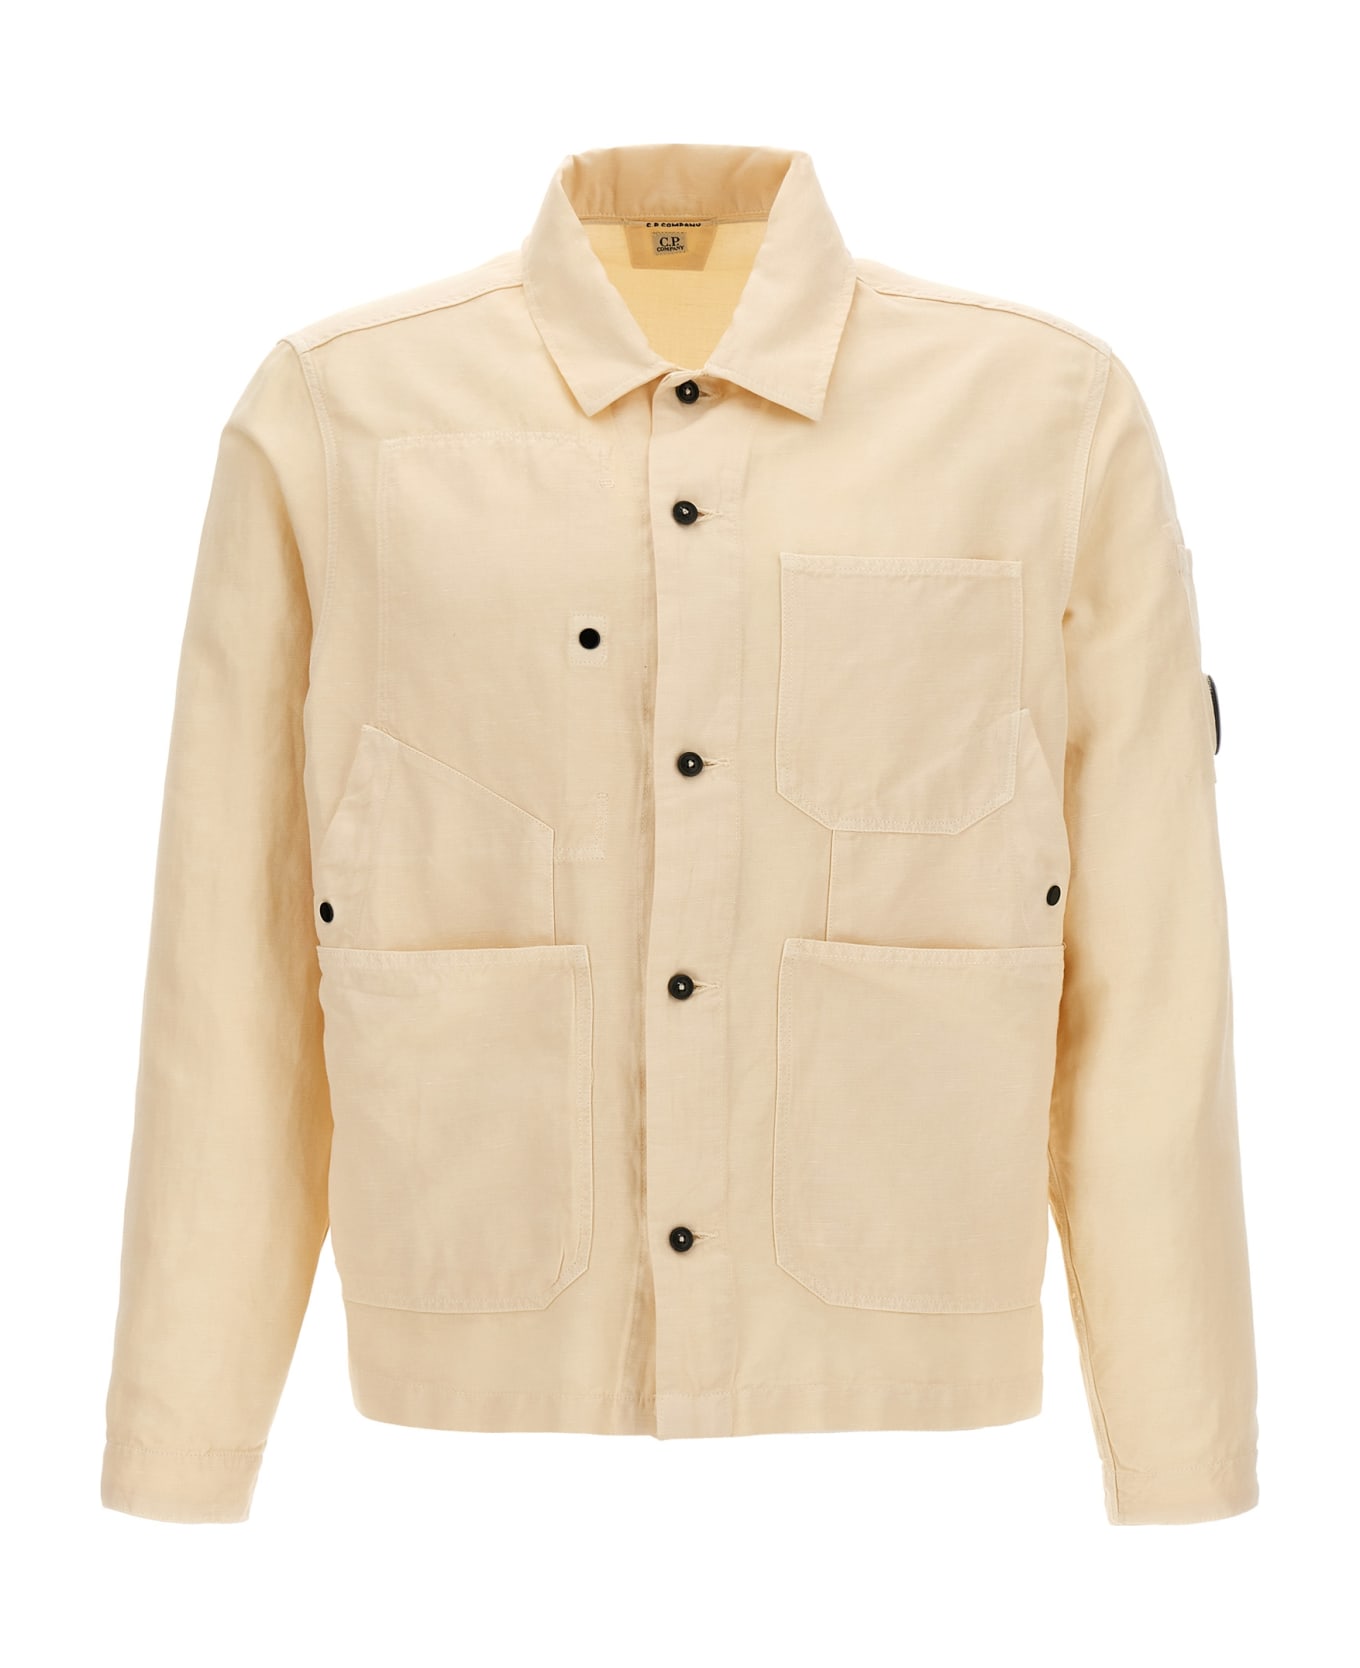 C.P. Company Overlapping Pocket Overshirt - Bianco